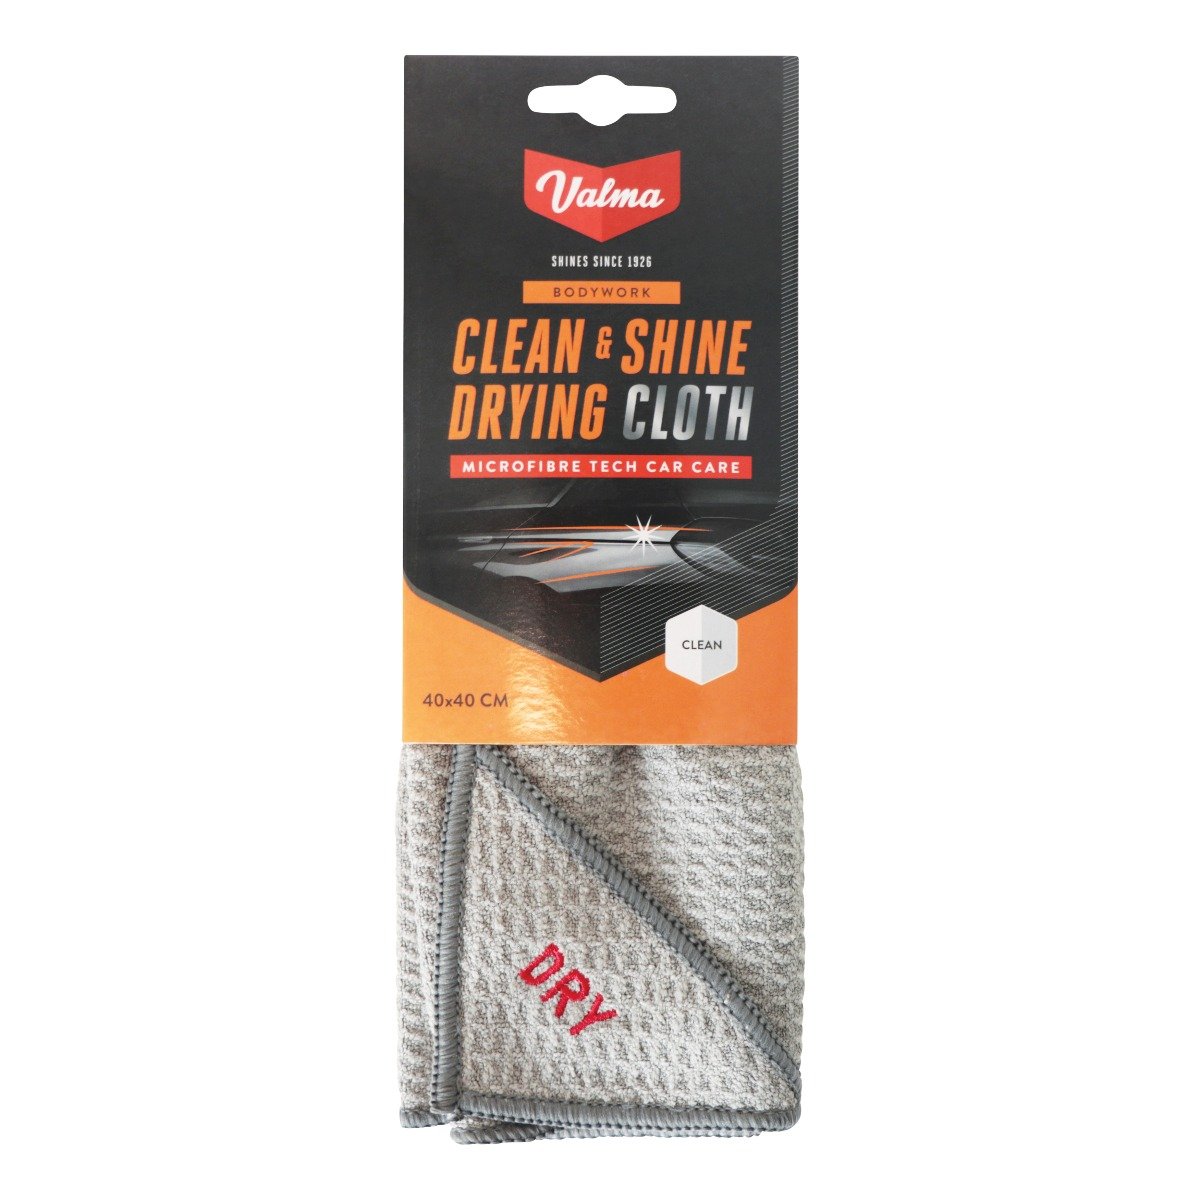 Clean & Shine Drying Cloth - 40x40cm